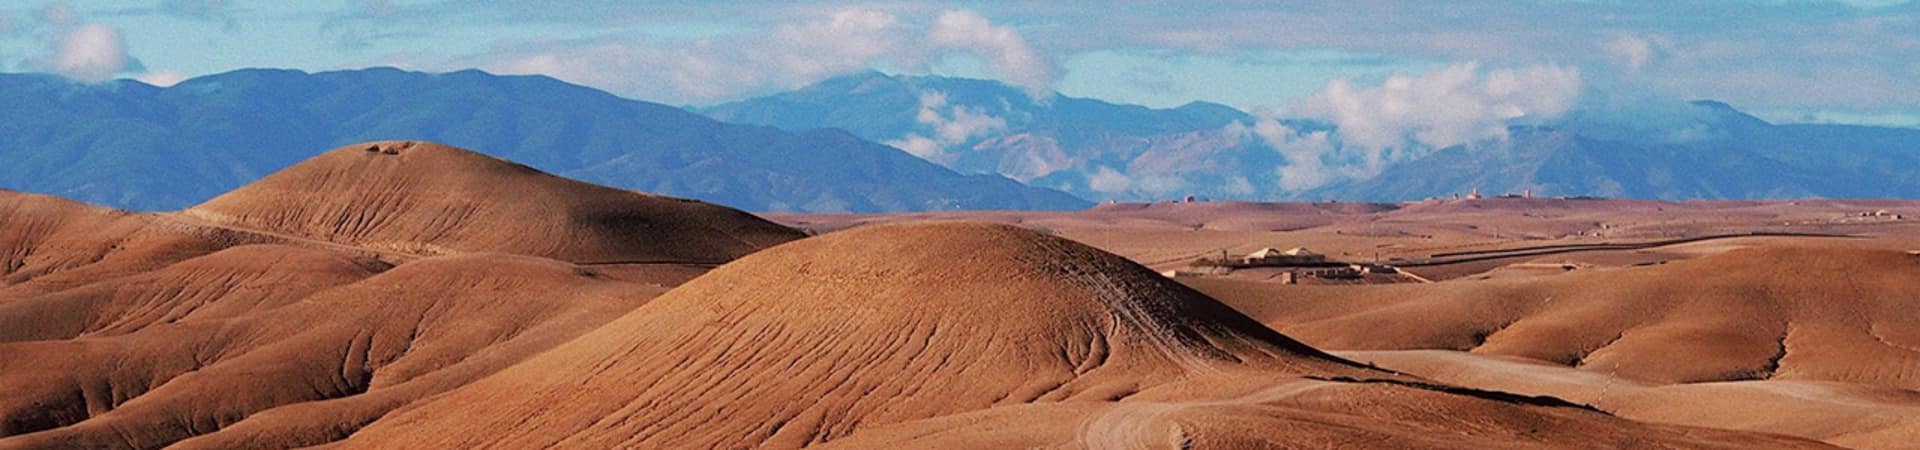 Marrocos agafay deserto montanha